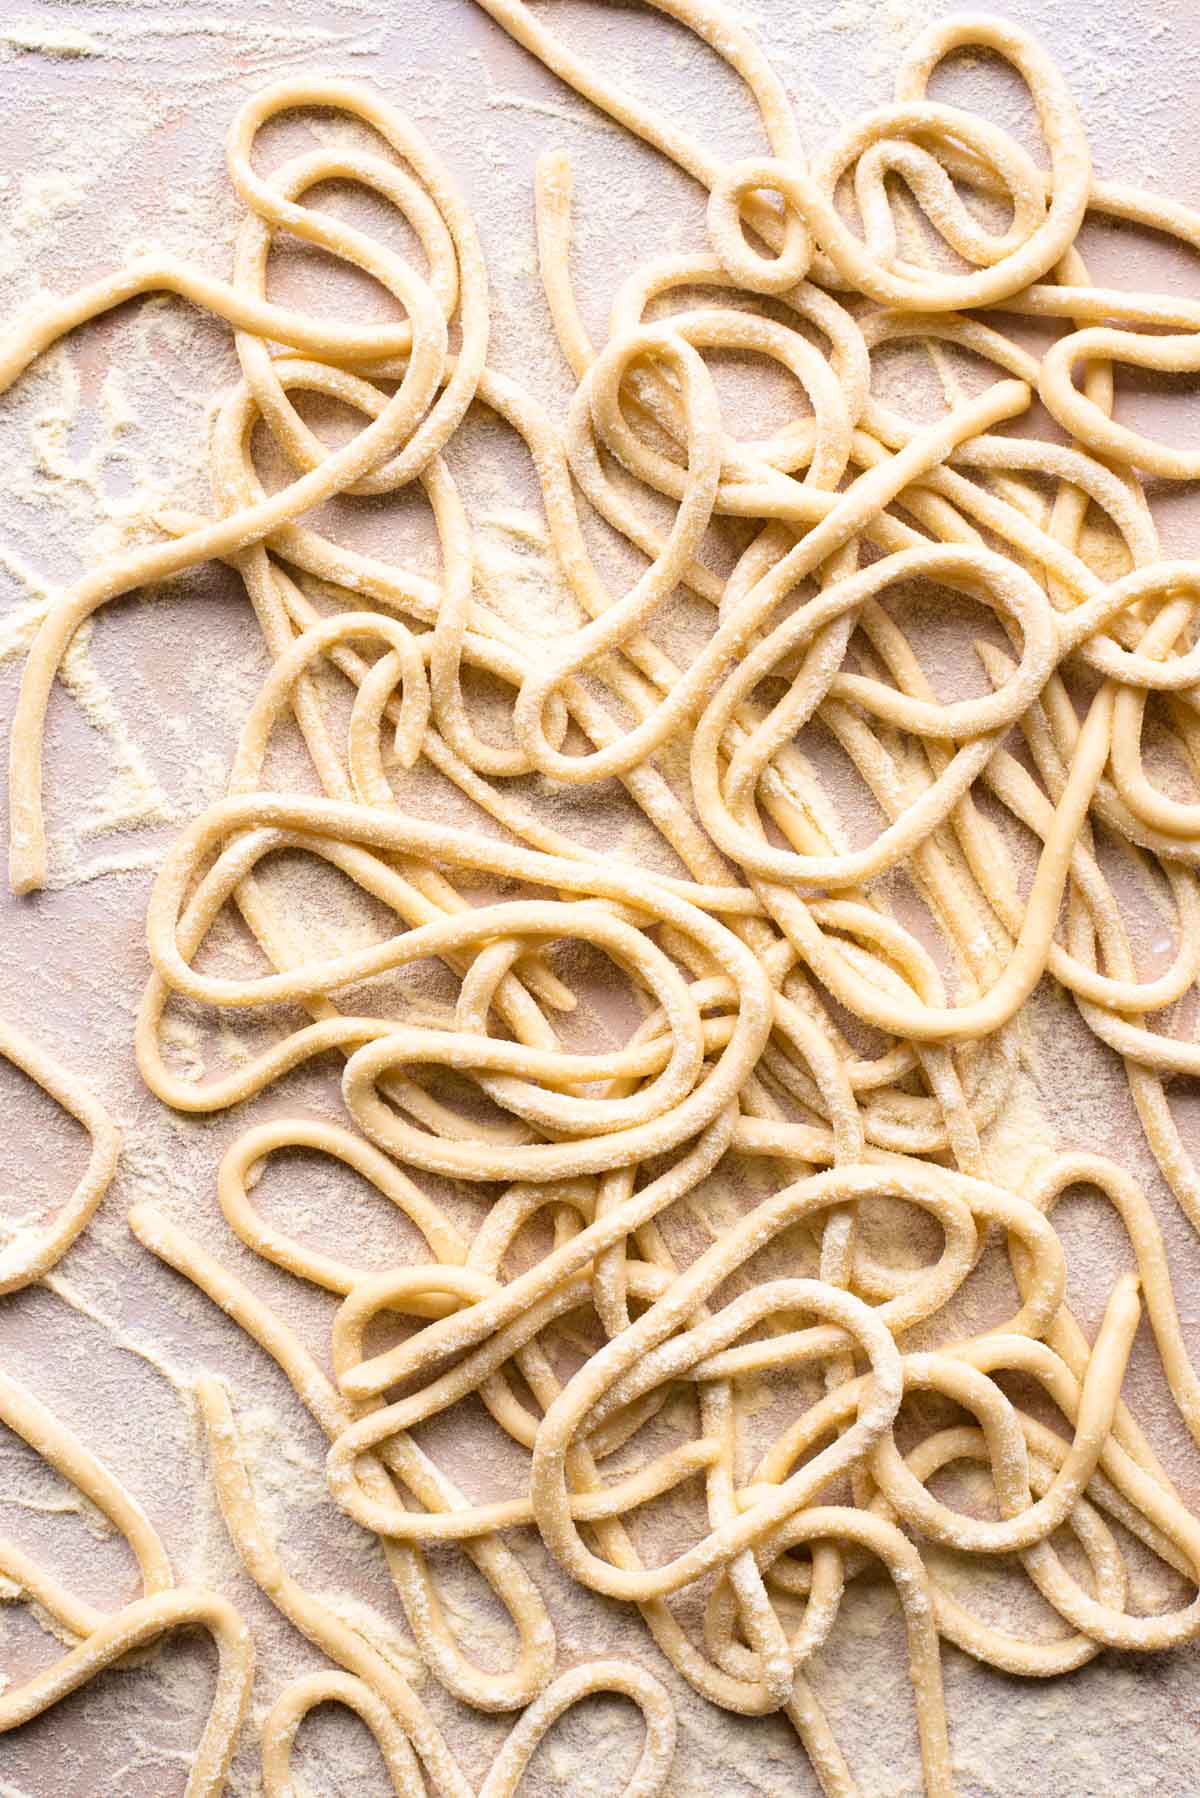 An overhead shot of homemade pici pasta